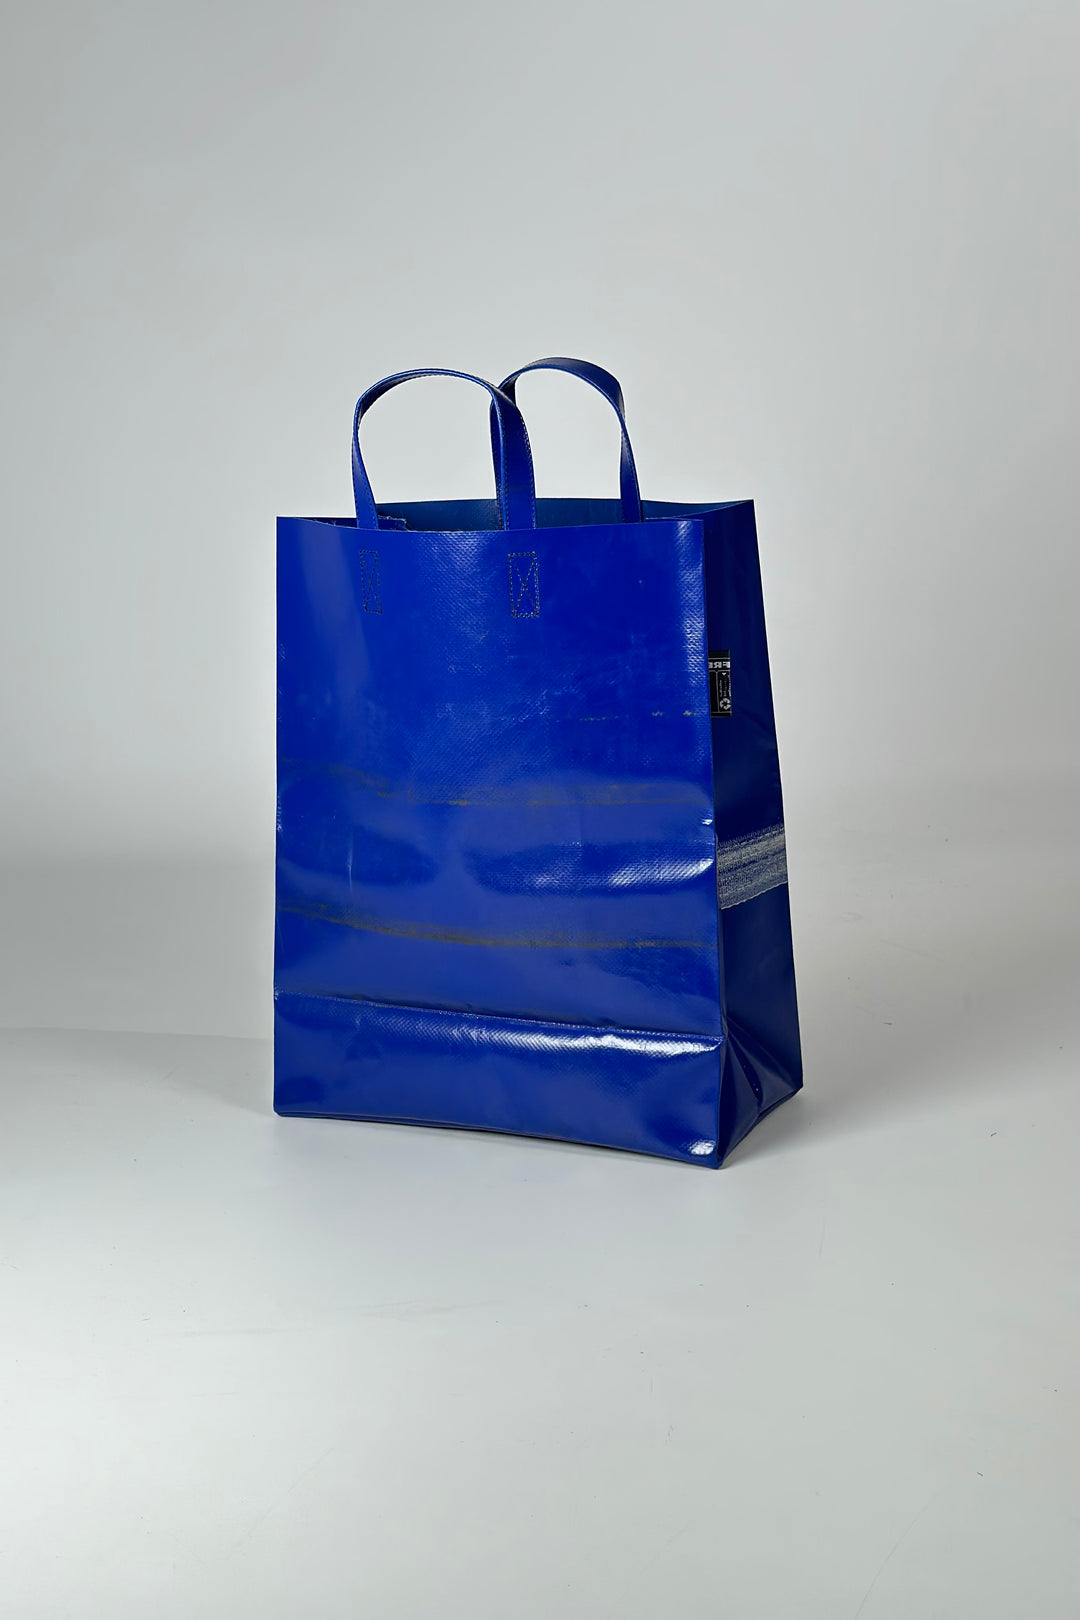 MIAMI VICE F52 Shopping Bag